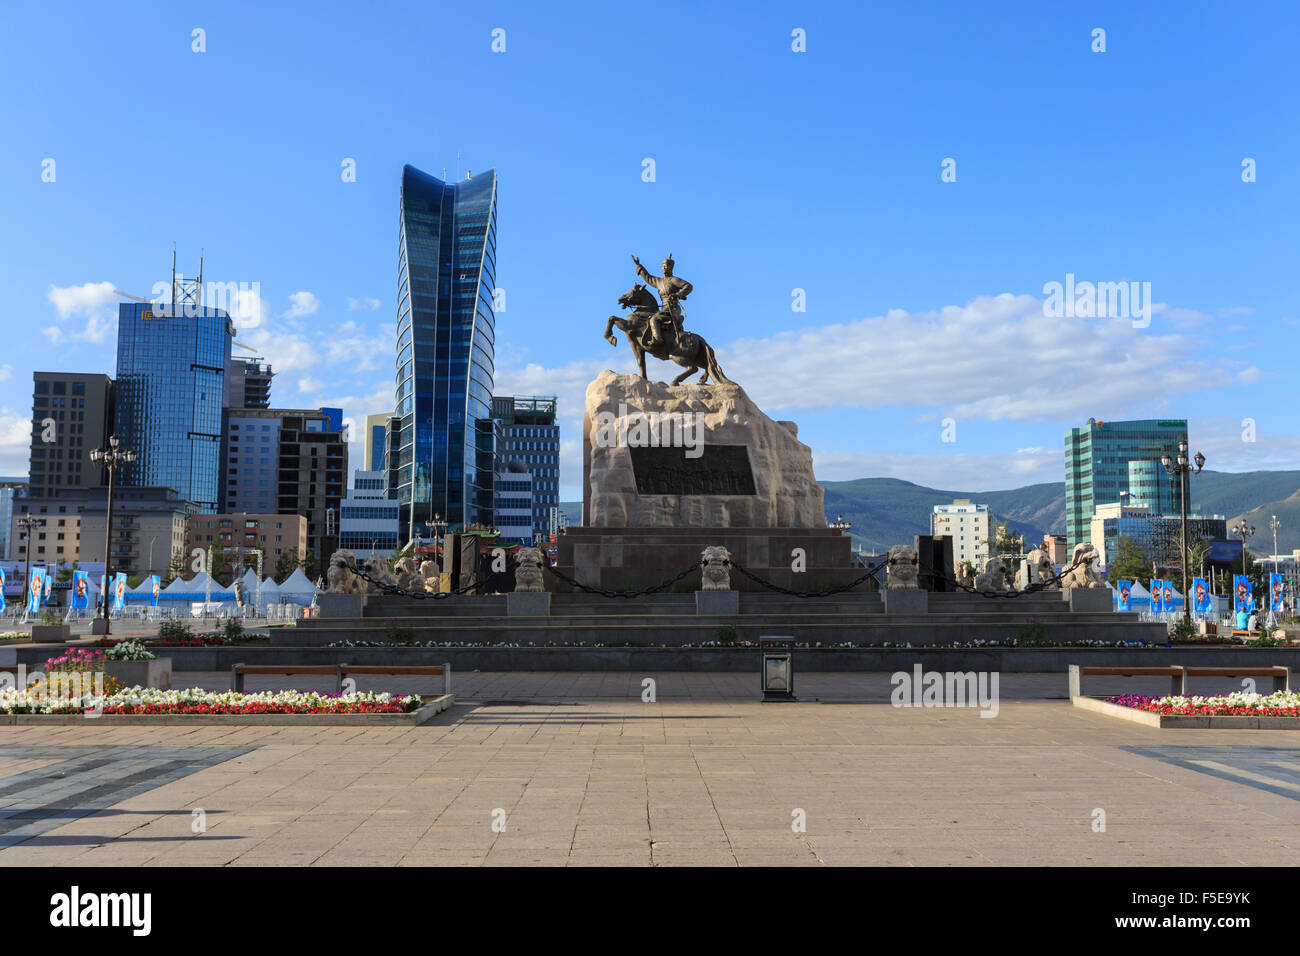 Statue of Sukhbaatar on horse, with new development behind, blue sky, Chinggis Khaan Square, Ulaanbaatar (Ulan Bator), Mongolia Stock Photo